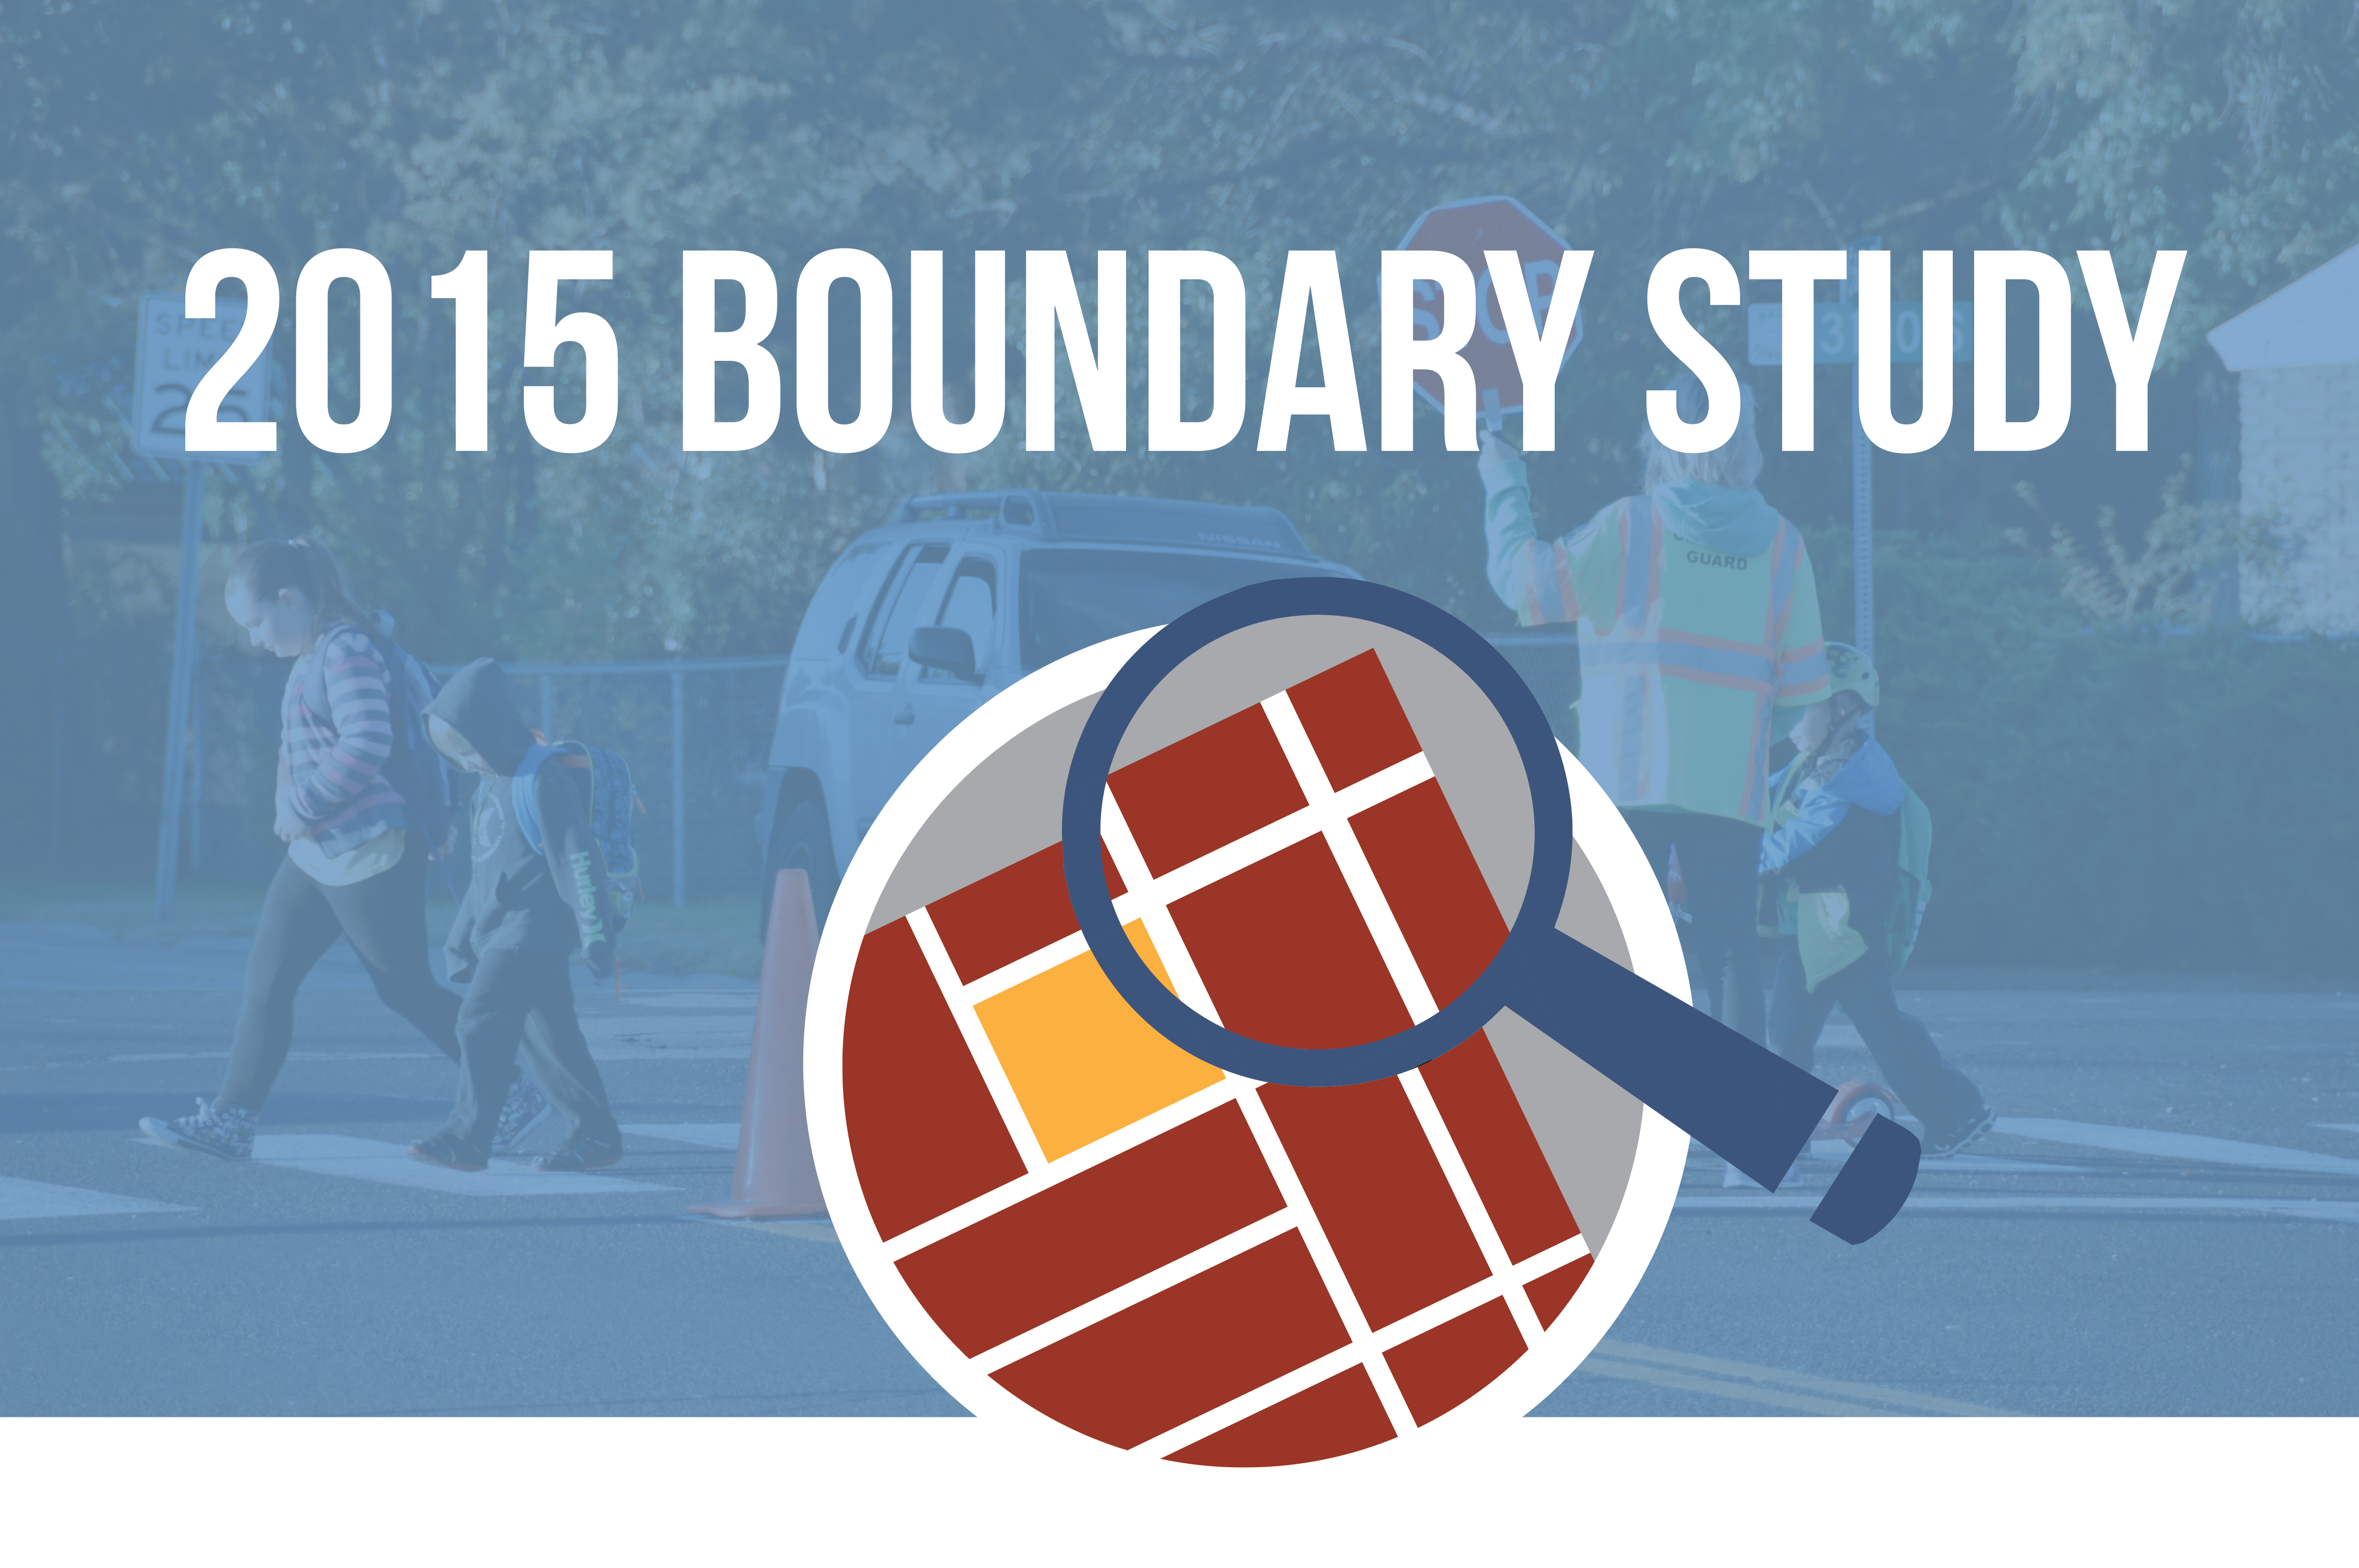 Video: 2015 Boundary Study